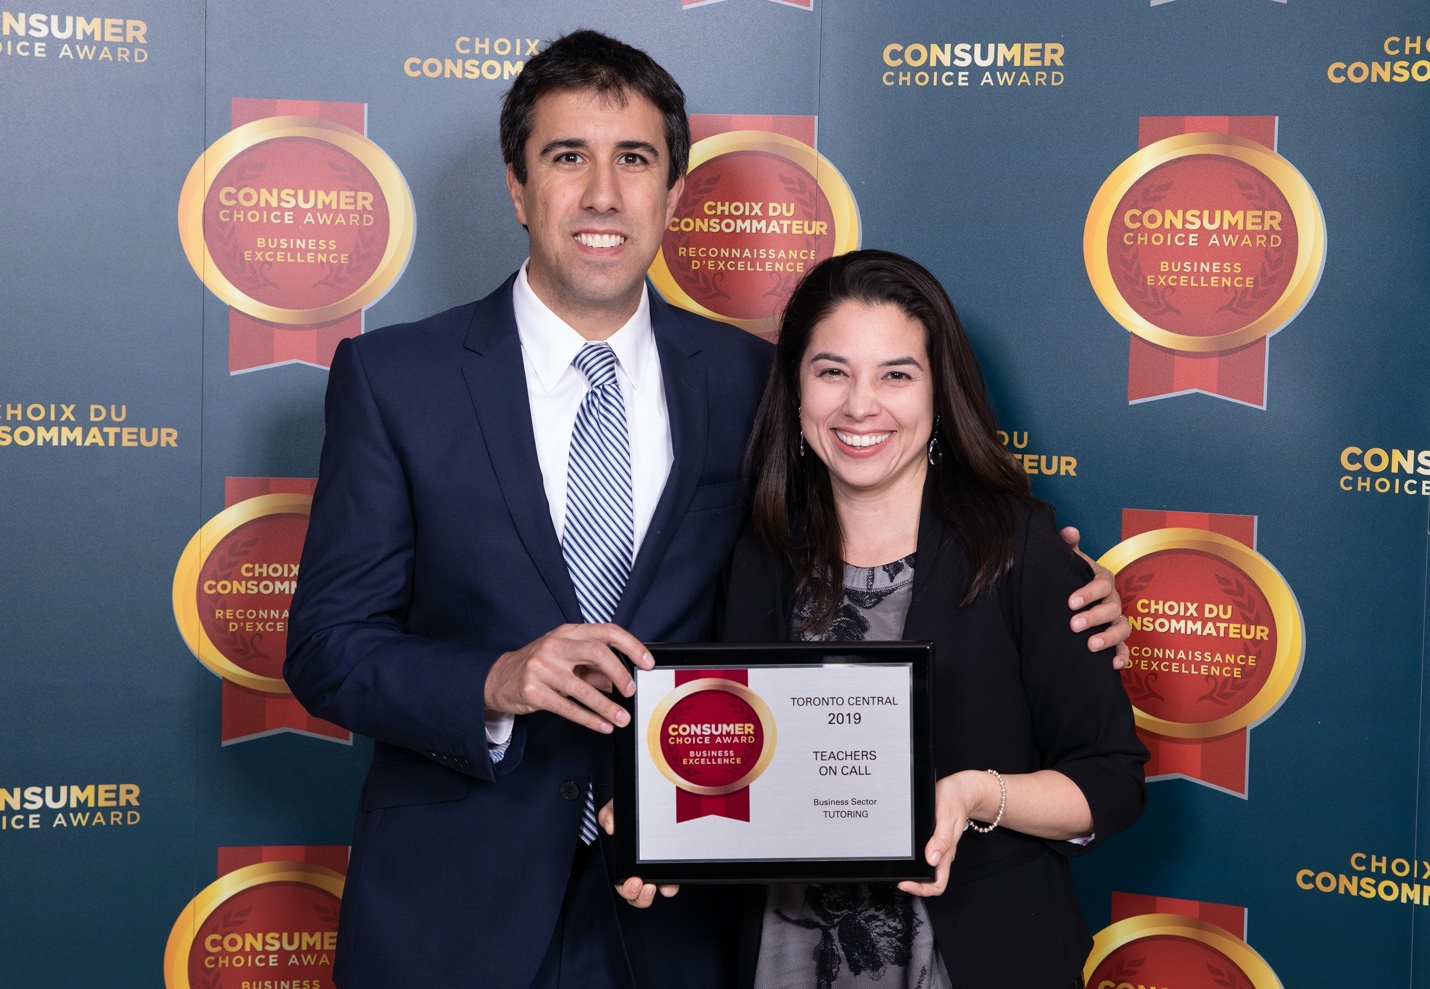 Consumer Choice Award, Thursday, April 30, 2020, Press release picture